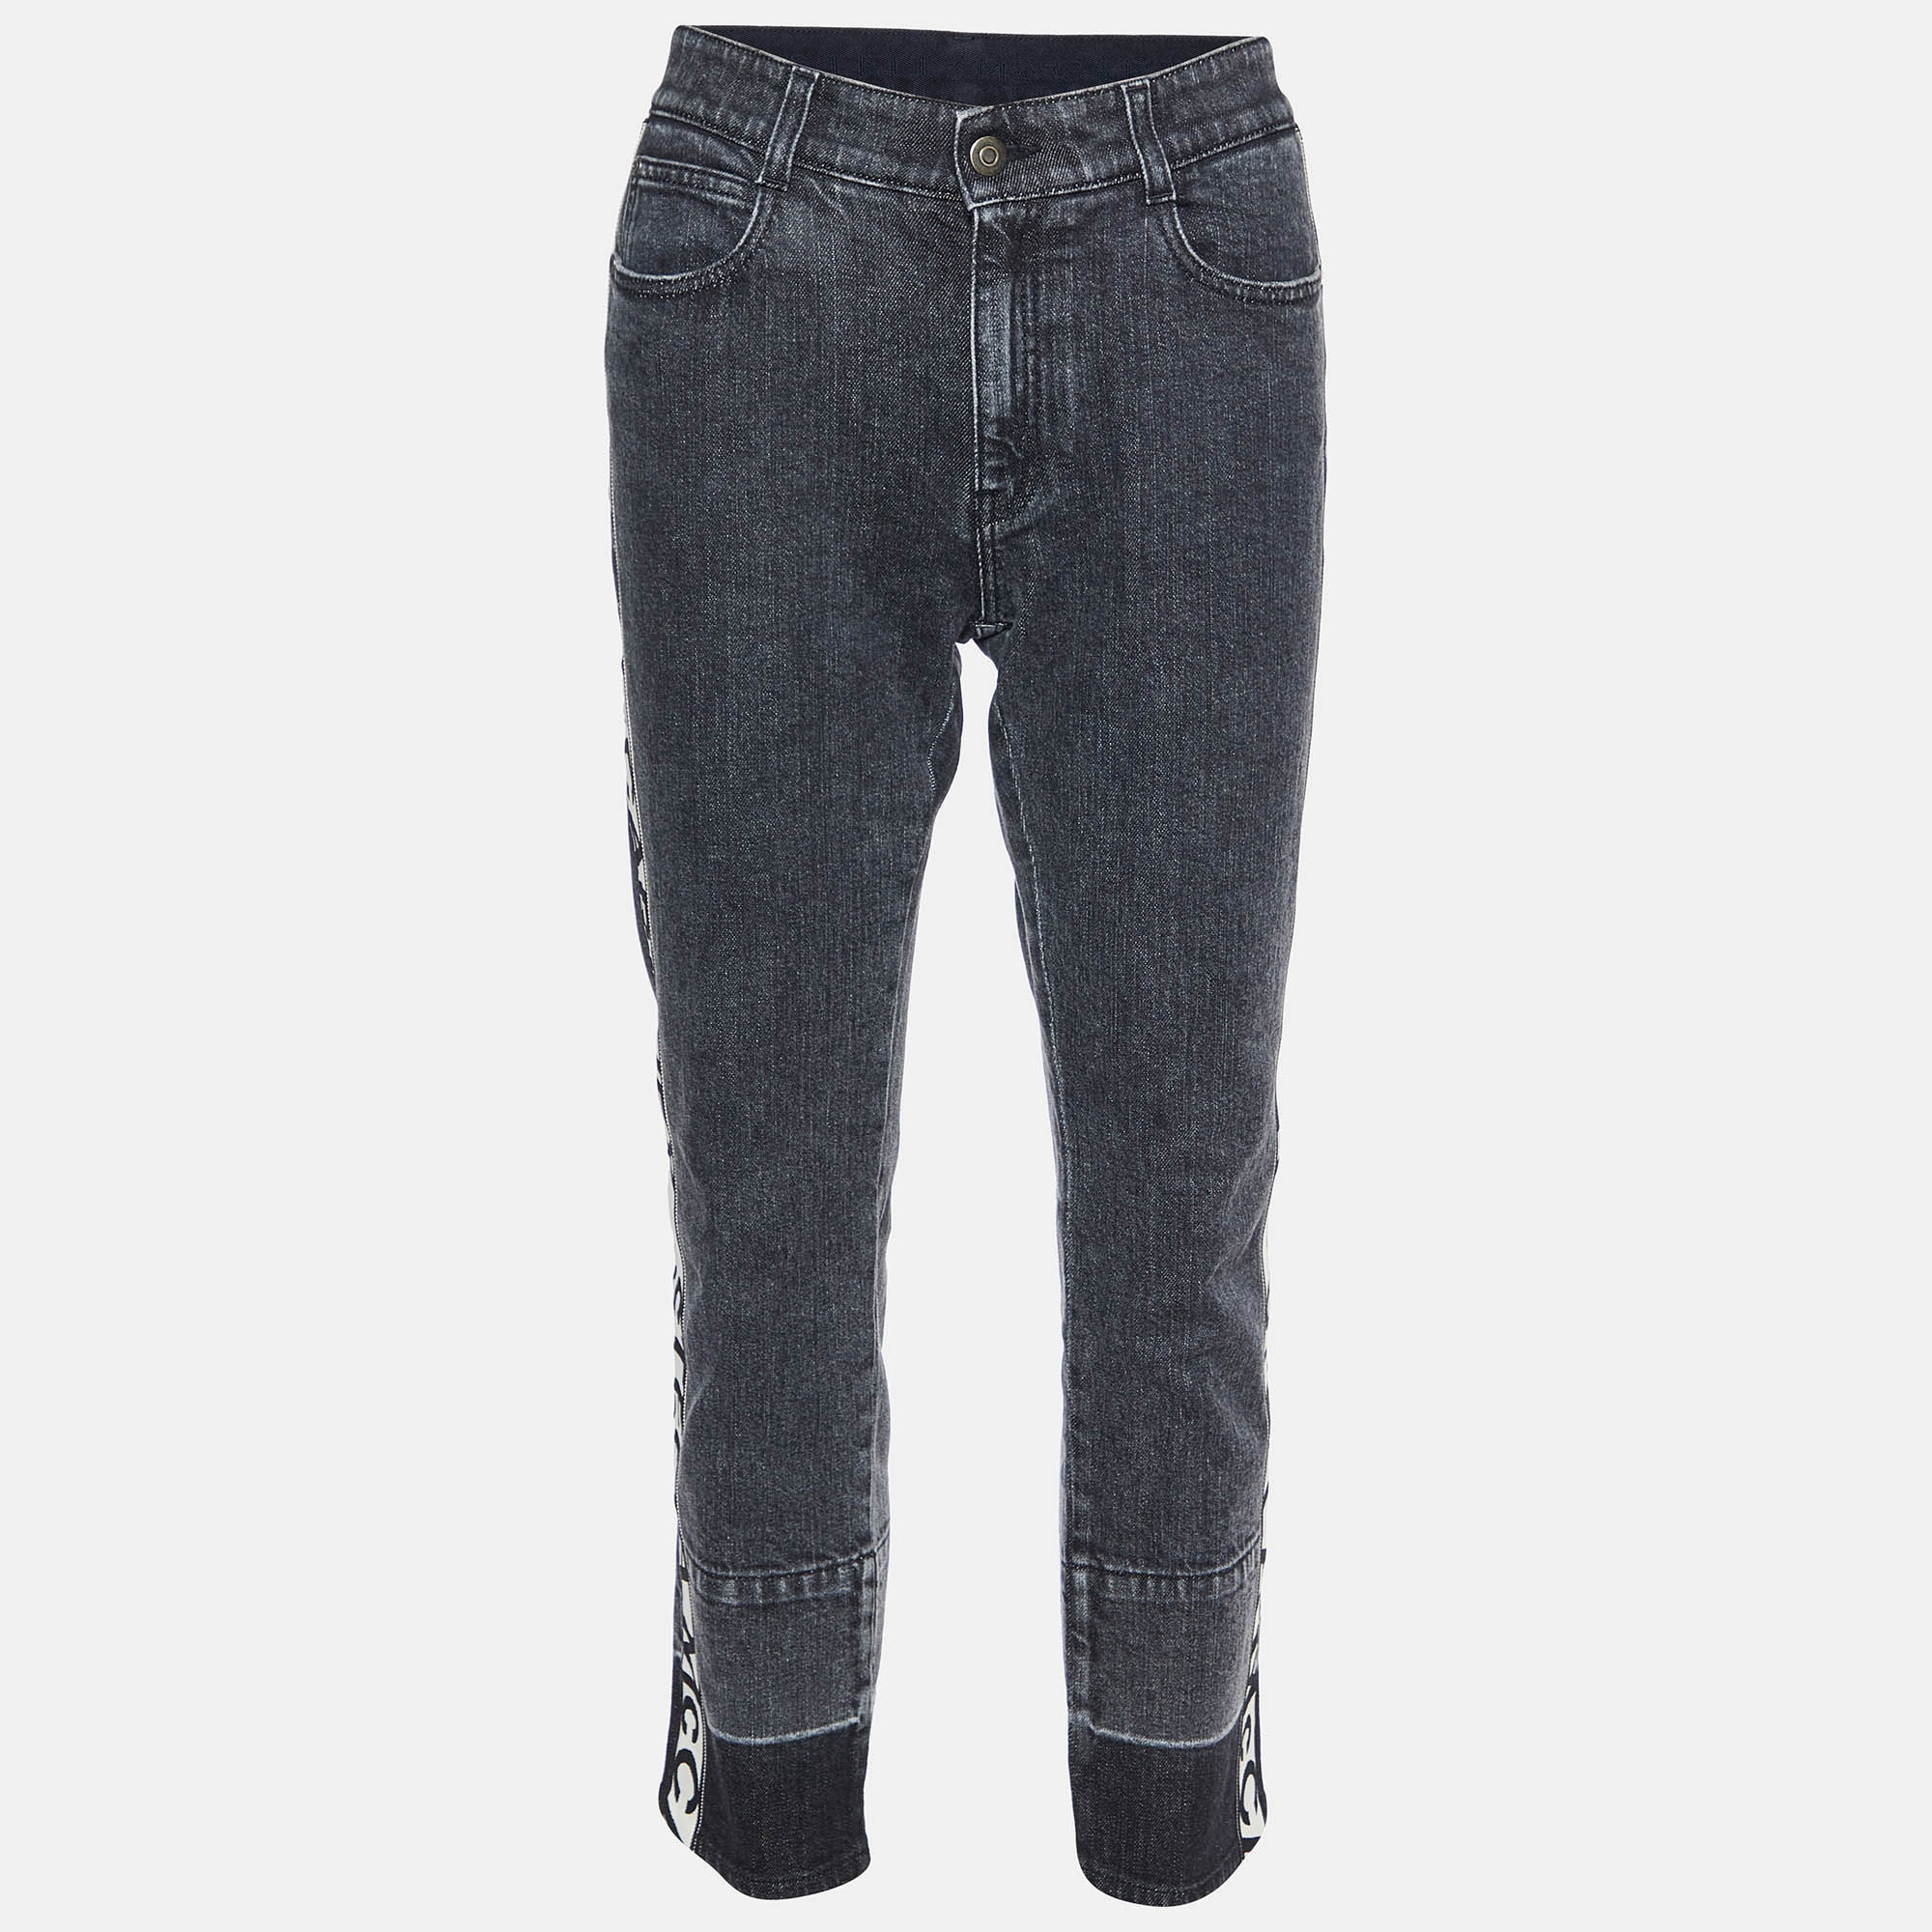 Stella mccartney black denim logo detail slim fit jeans m/waist 32"